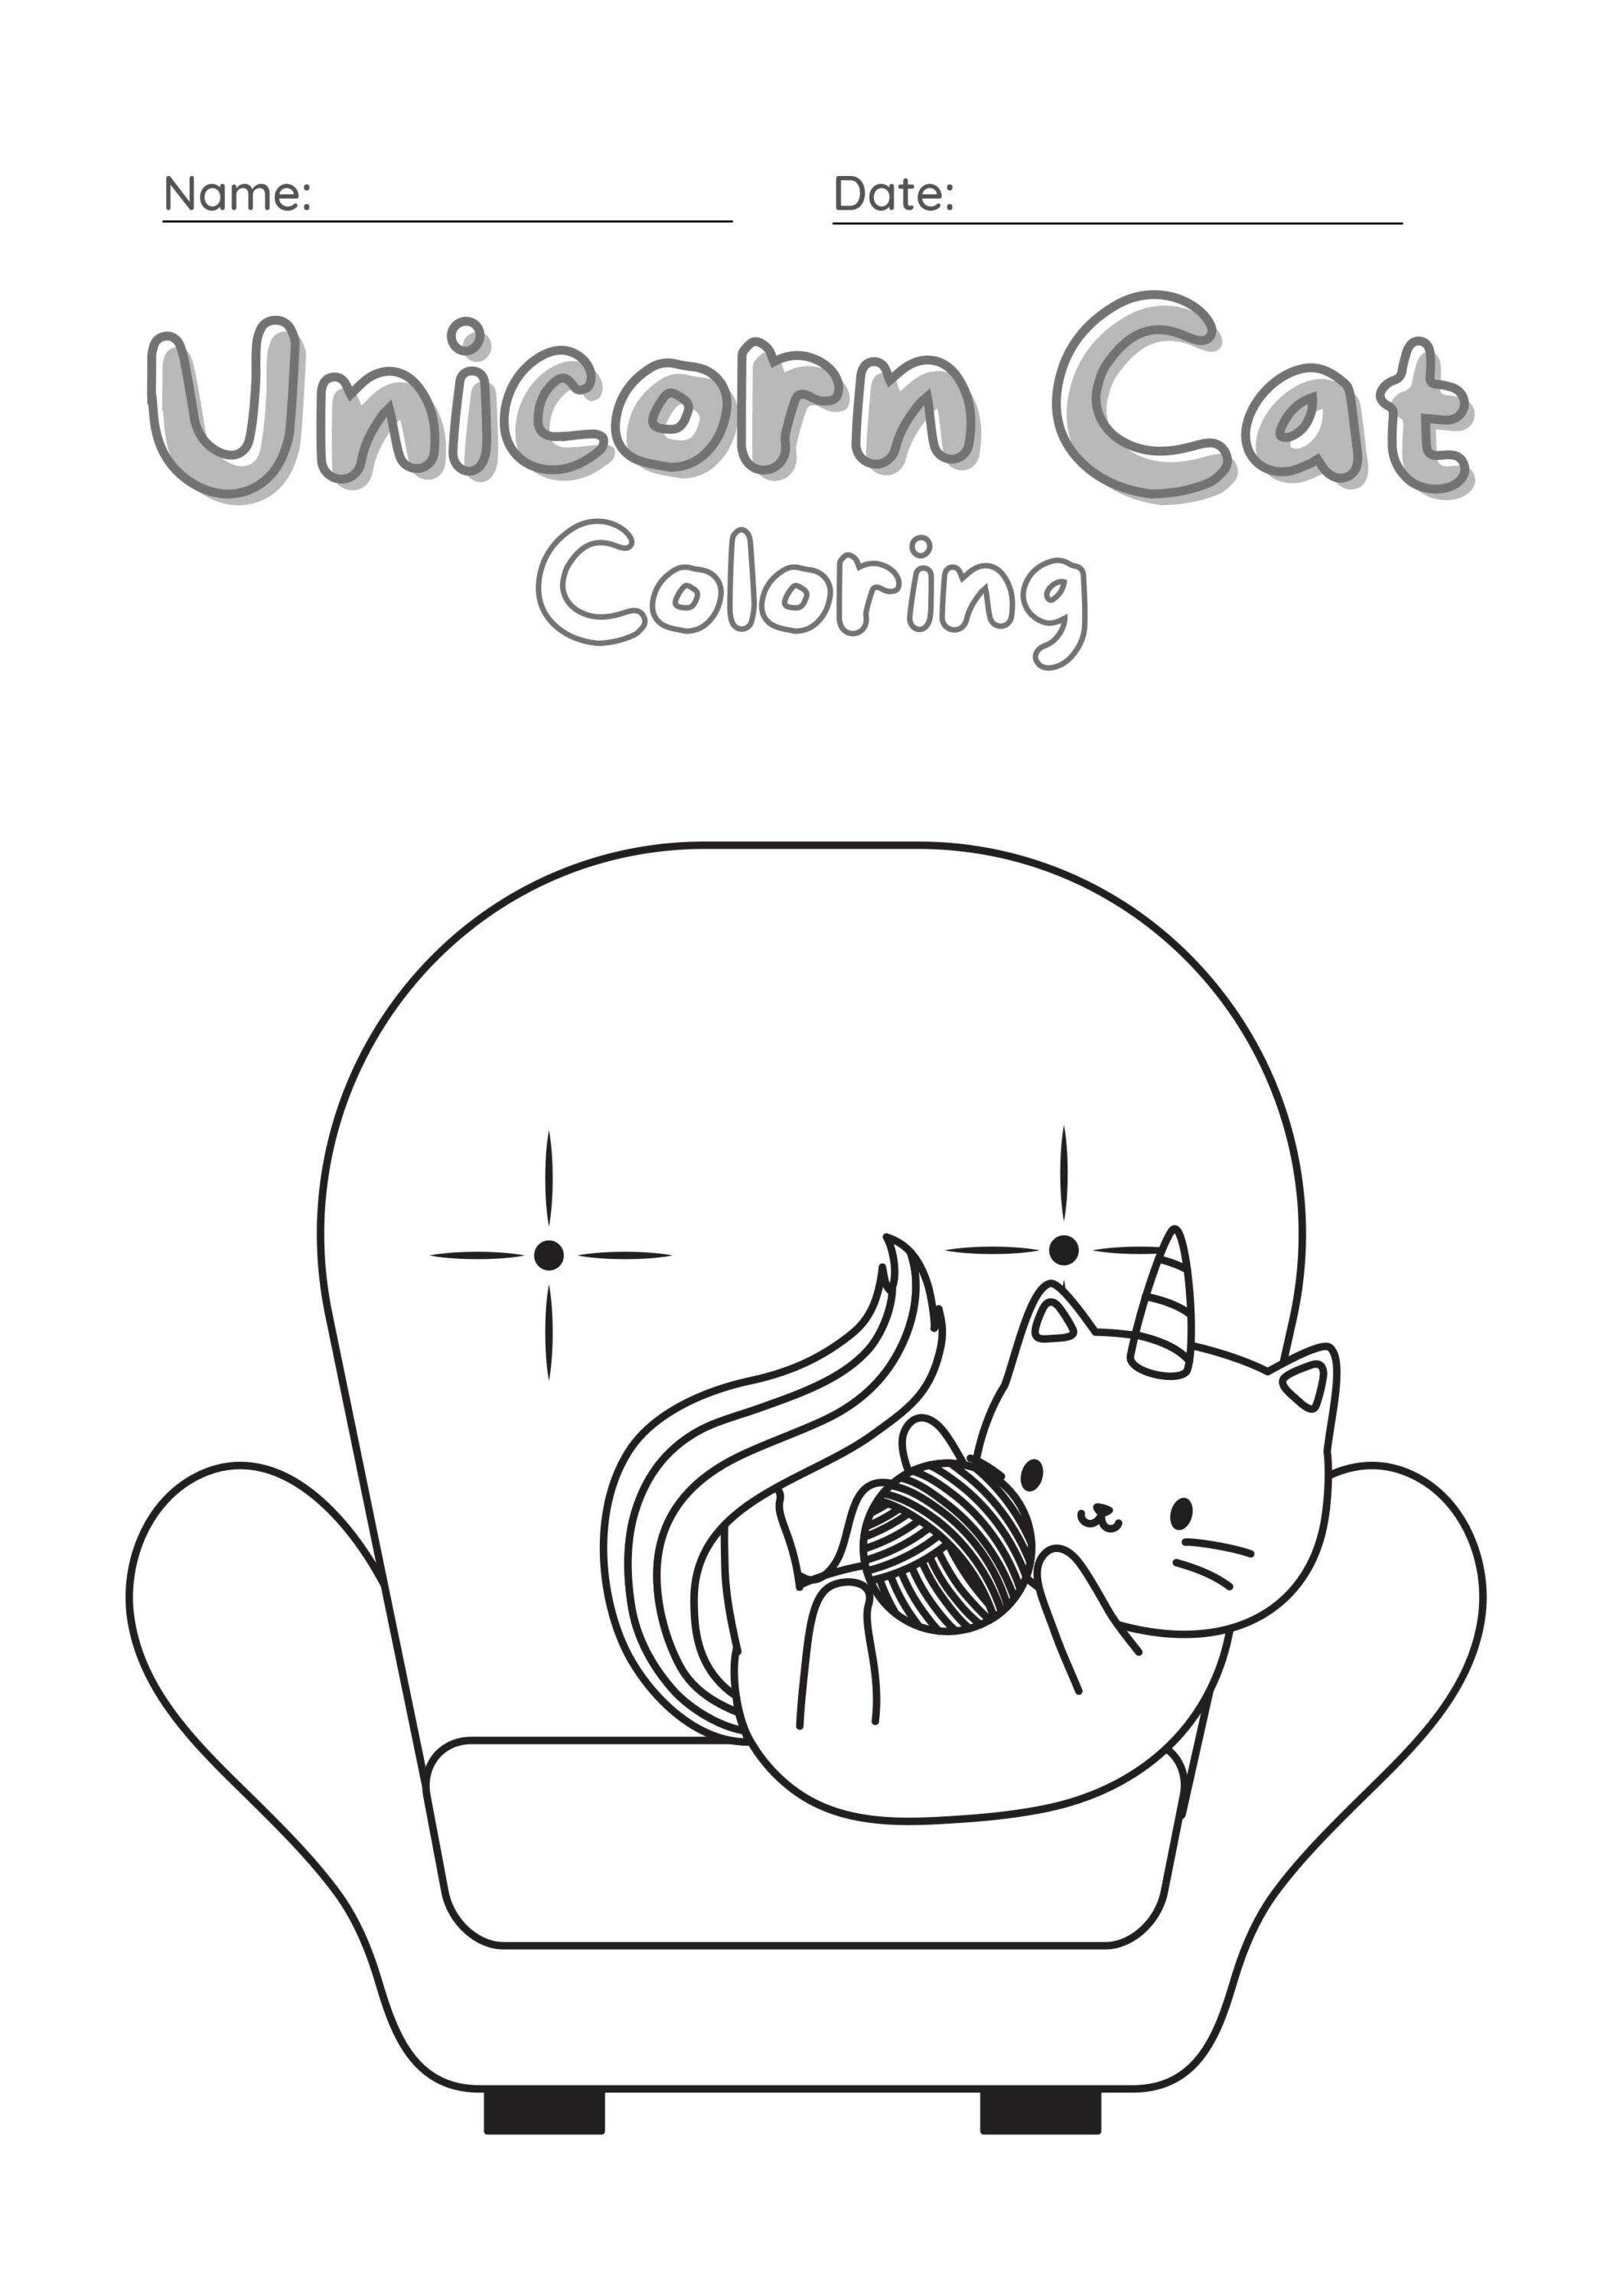 Unicorn Cat Coloring Worksheet Set 9